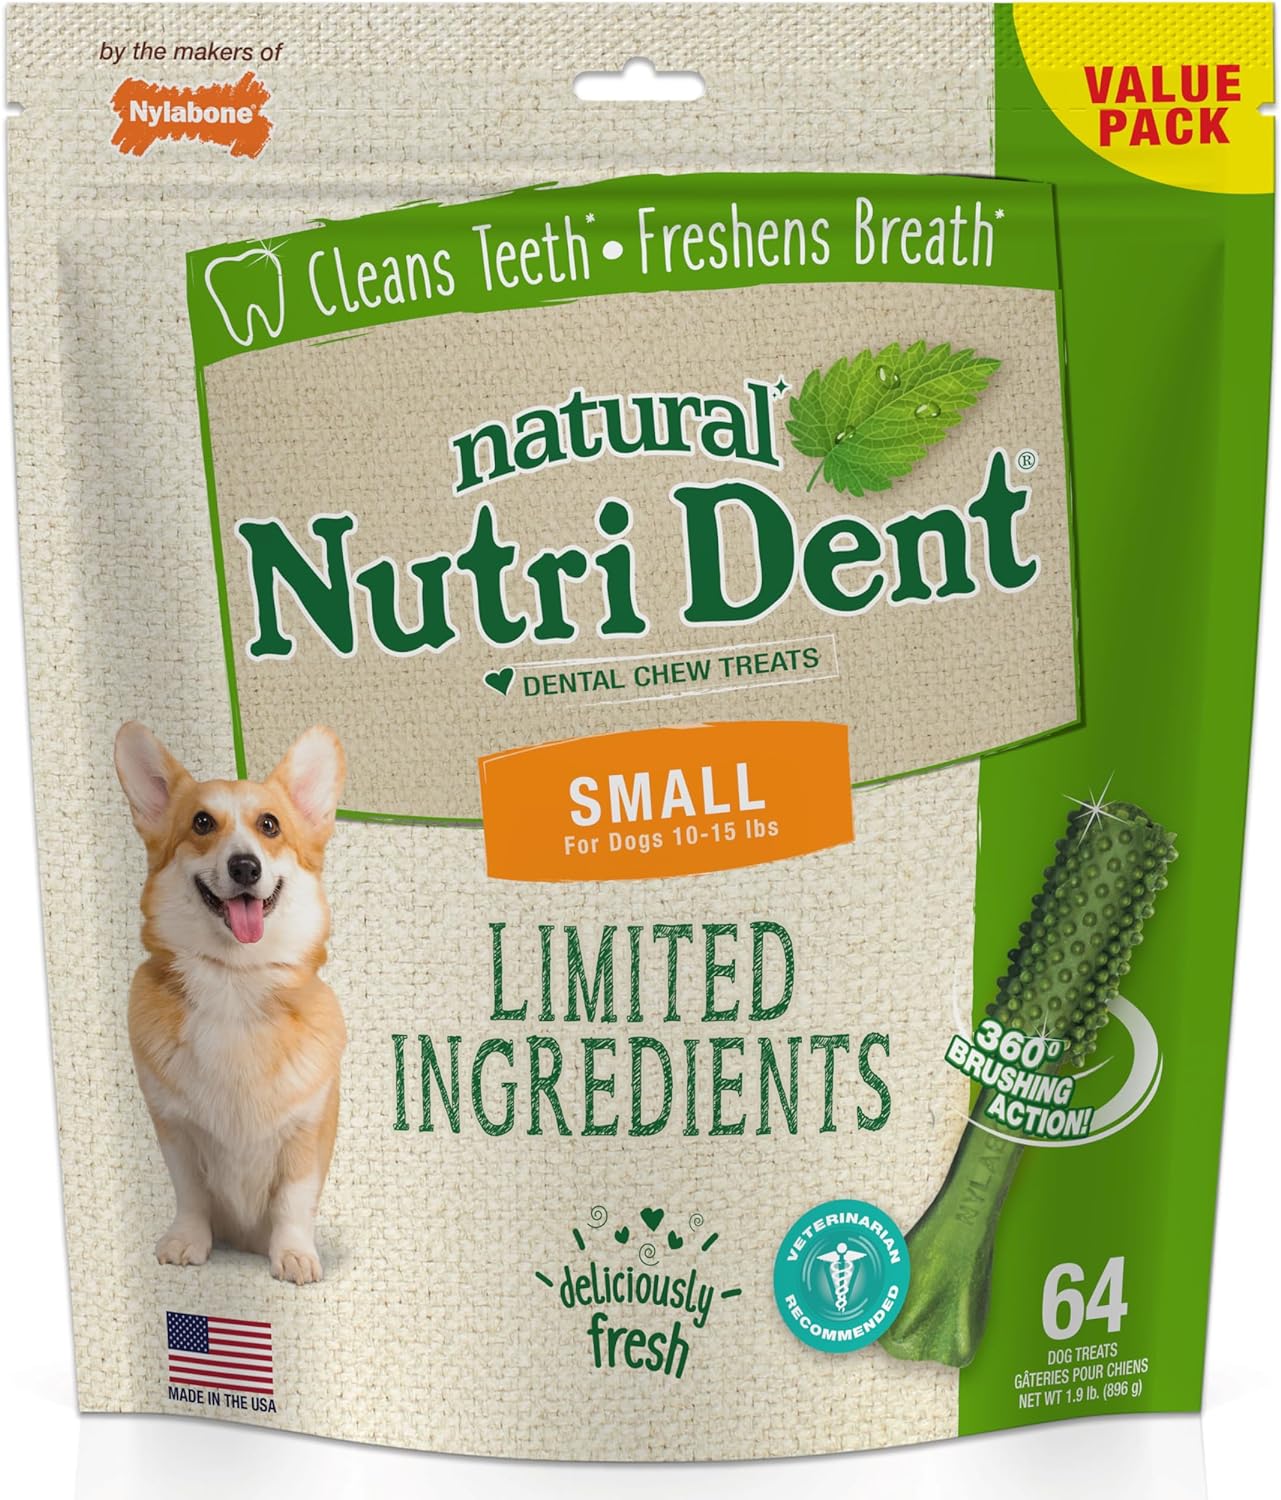 Nylabone Nutri Dent Dog Dental Chews - Natural Dog Teeth Cleaning & Breath Freshener - Dental Treats for Dogs - Fresh Breath Flavor, Small (64 Count)